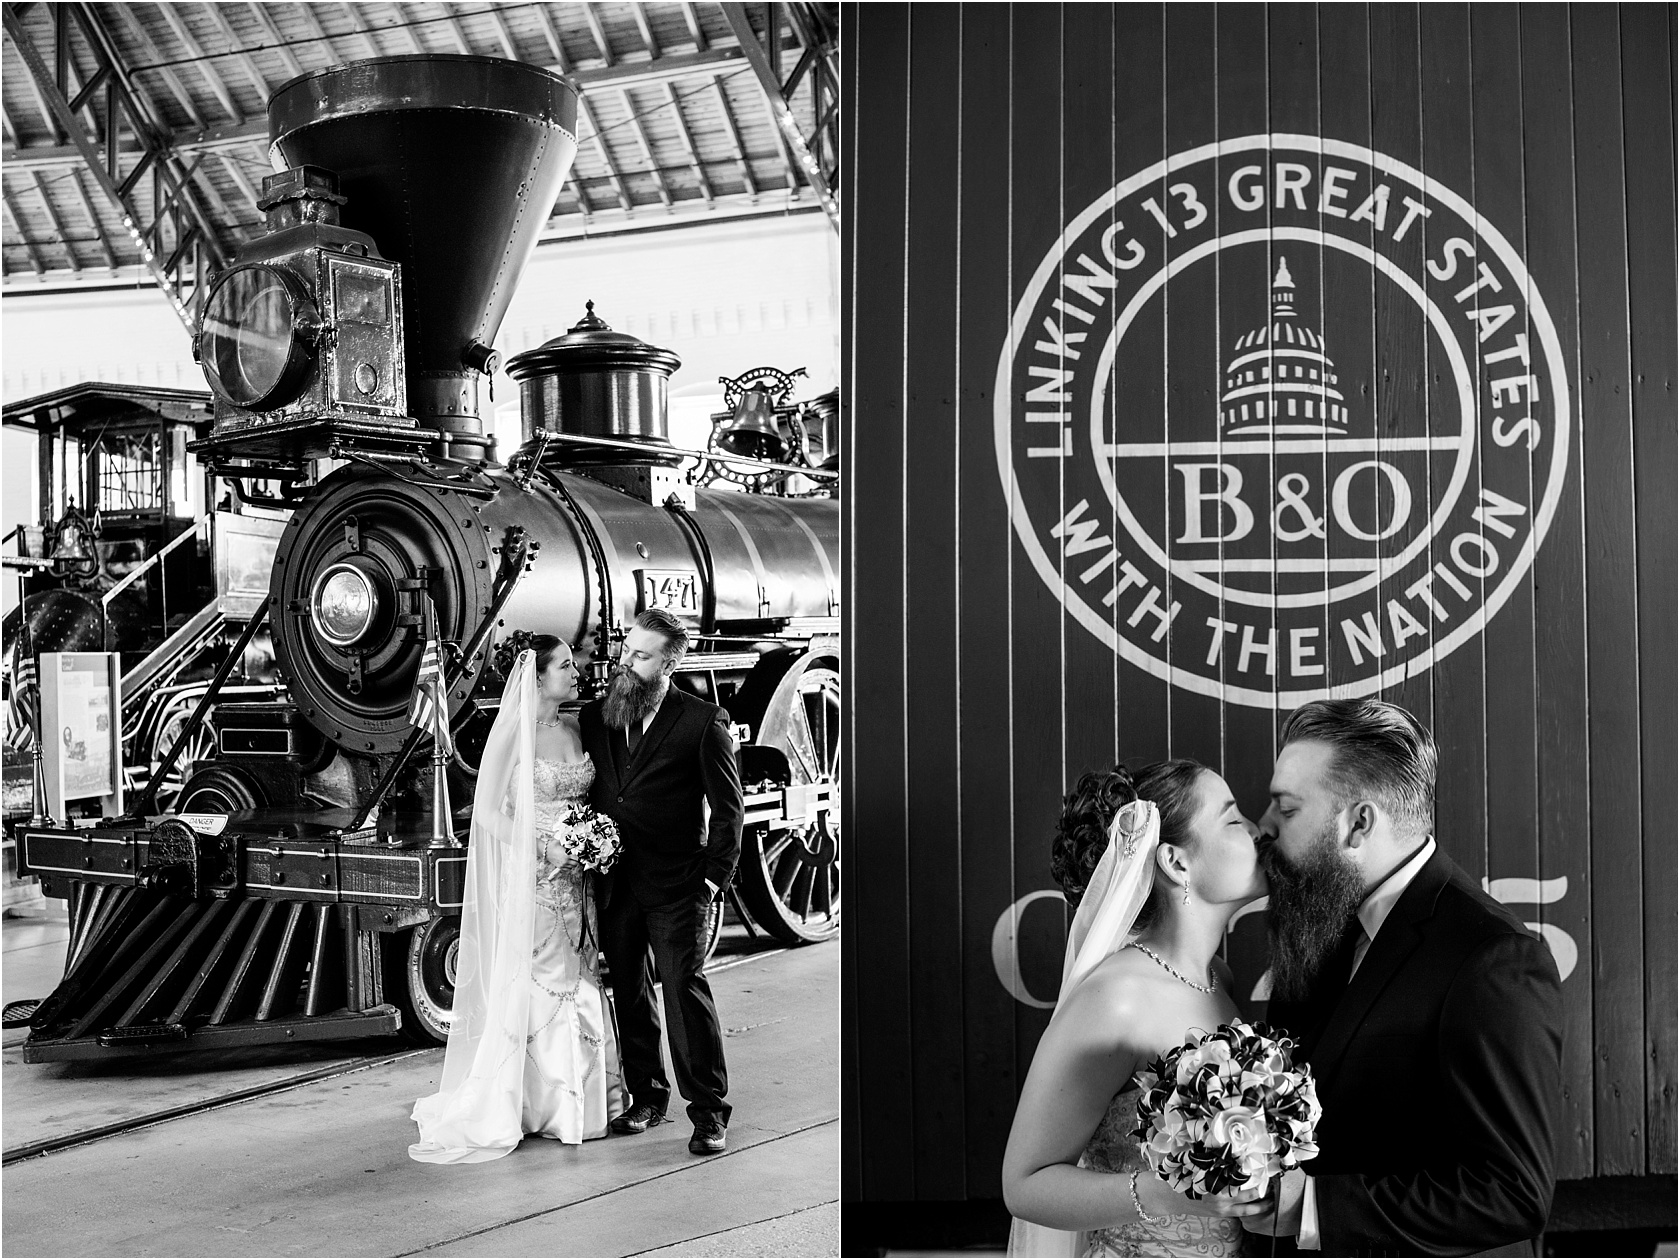 Brown Wedding Baltimore B&O Railroad Museum Wedding Living Radiant Photography photos_0023.jpg